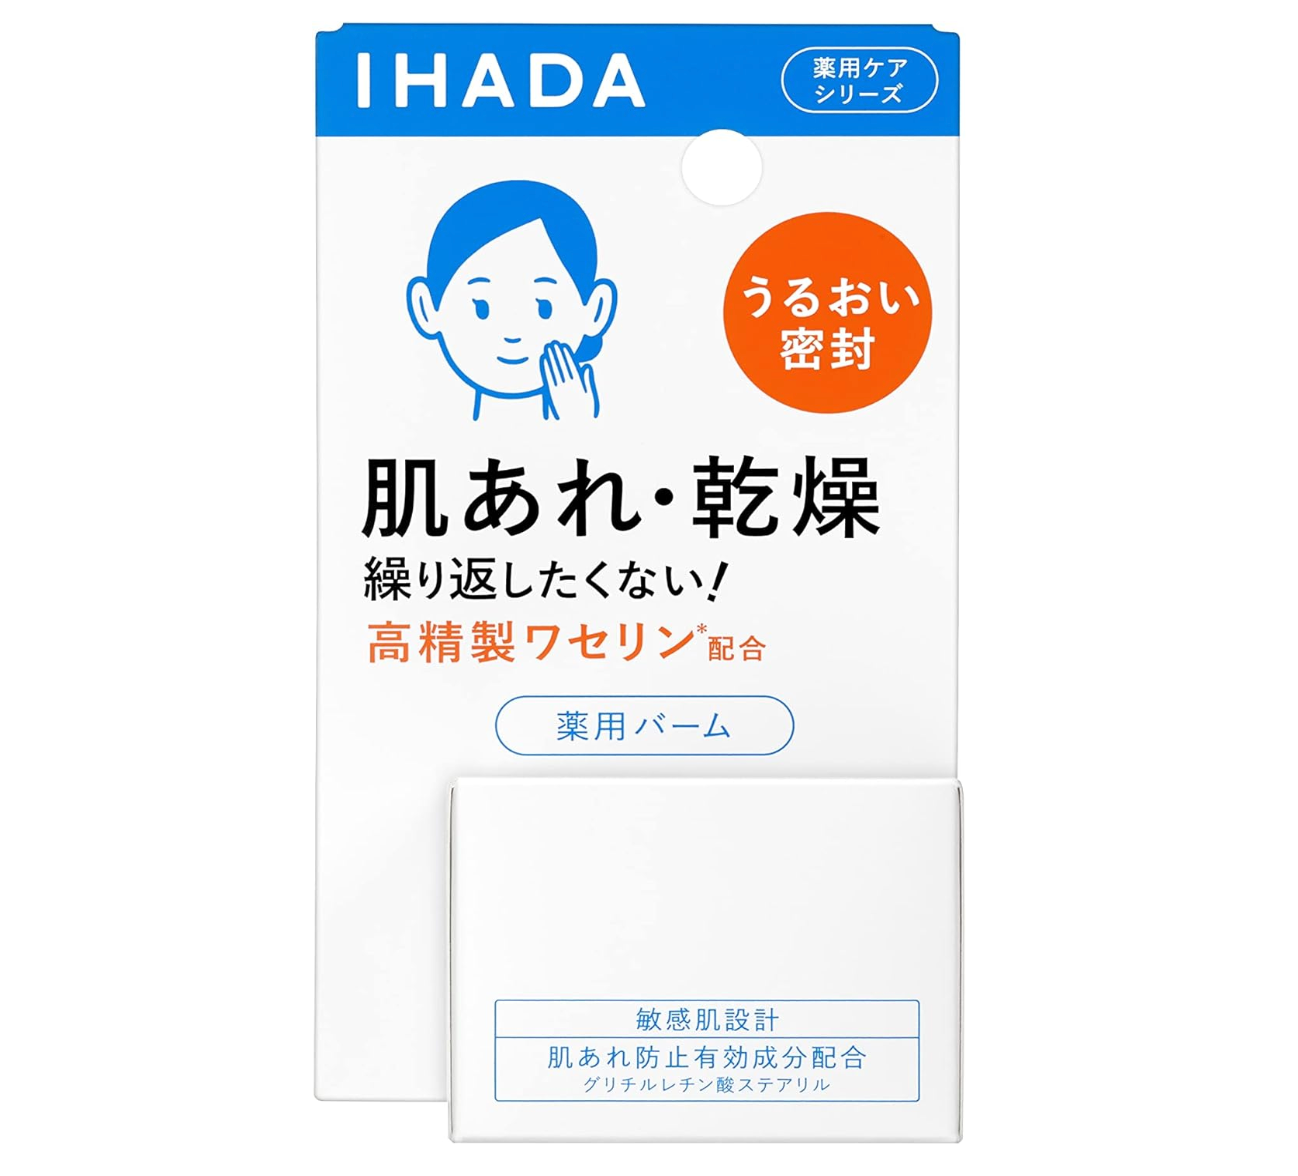 Shiseido Ihada Medicated Balm For Moistuzing 20g - Japanese Facial Moisturizing Product